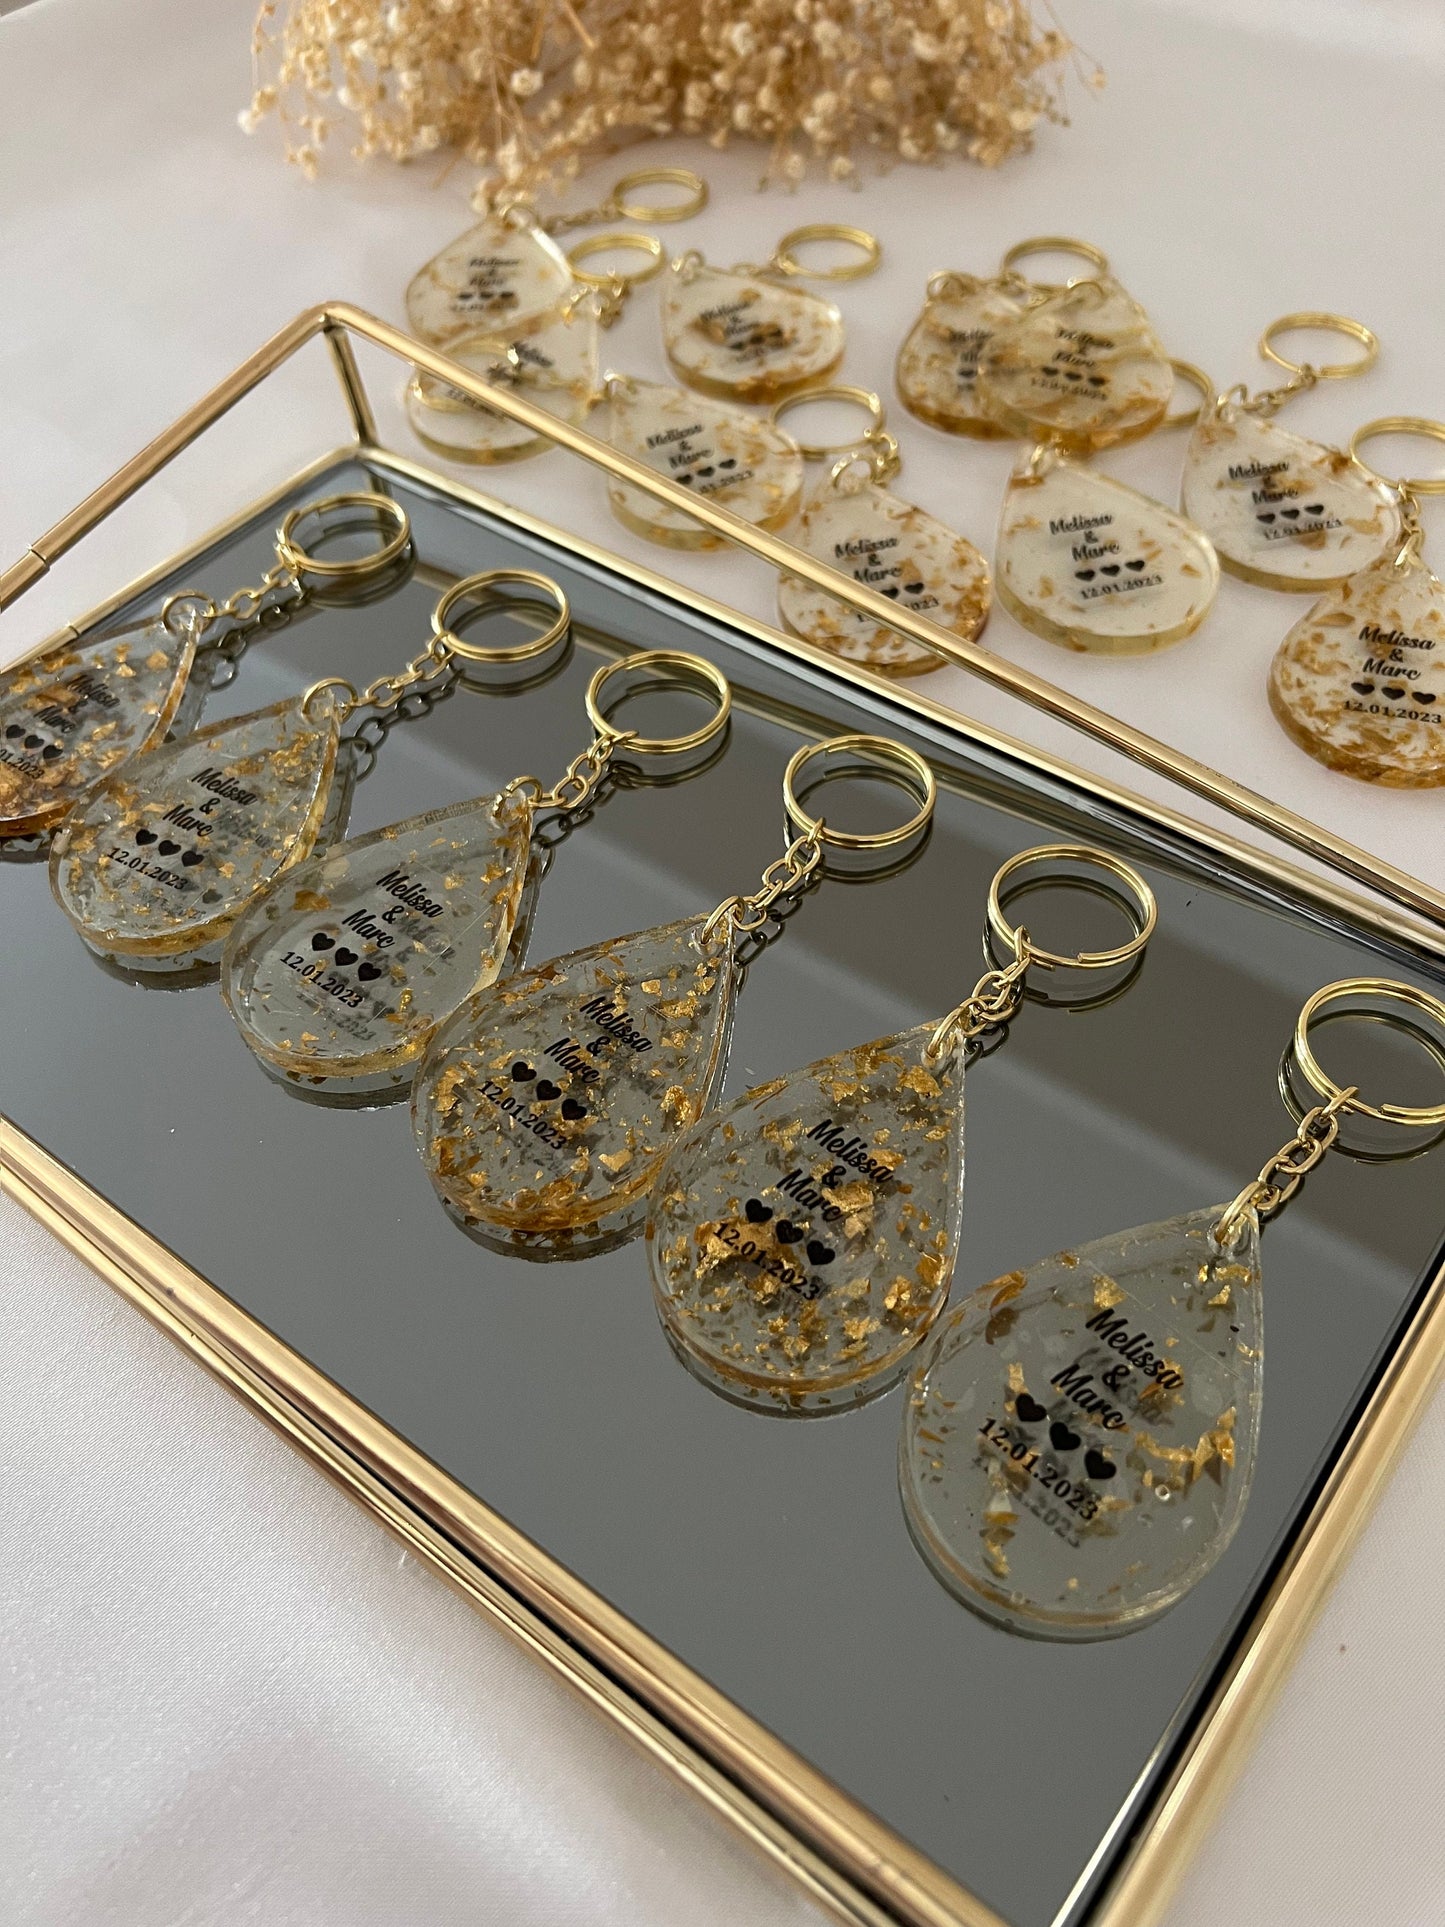 Custom keychains | Wedding Keychains Favors | Baby Shower Keychain Favors | Party Shower Favors for Guests | Bridal Shower Gifts in bulk